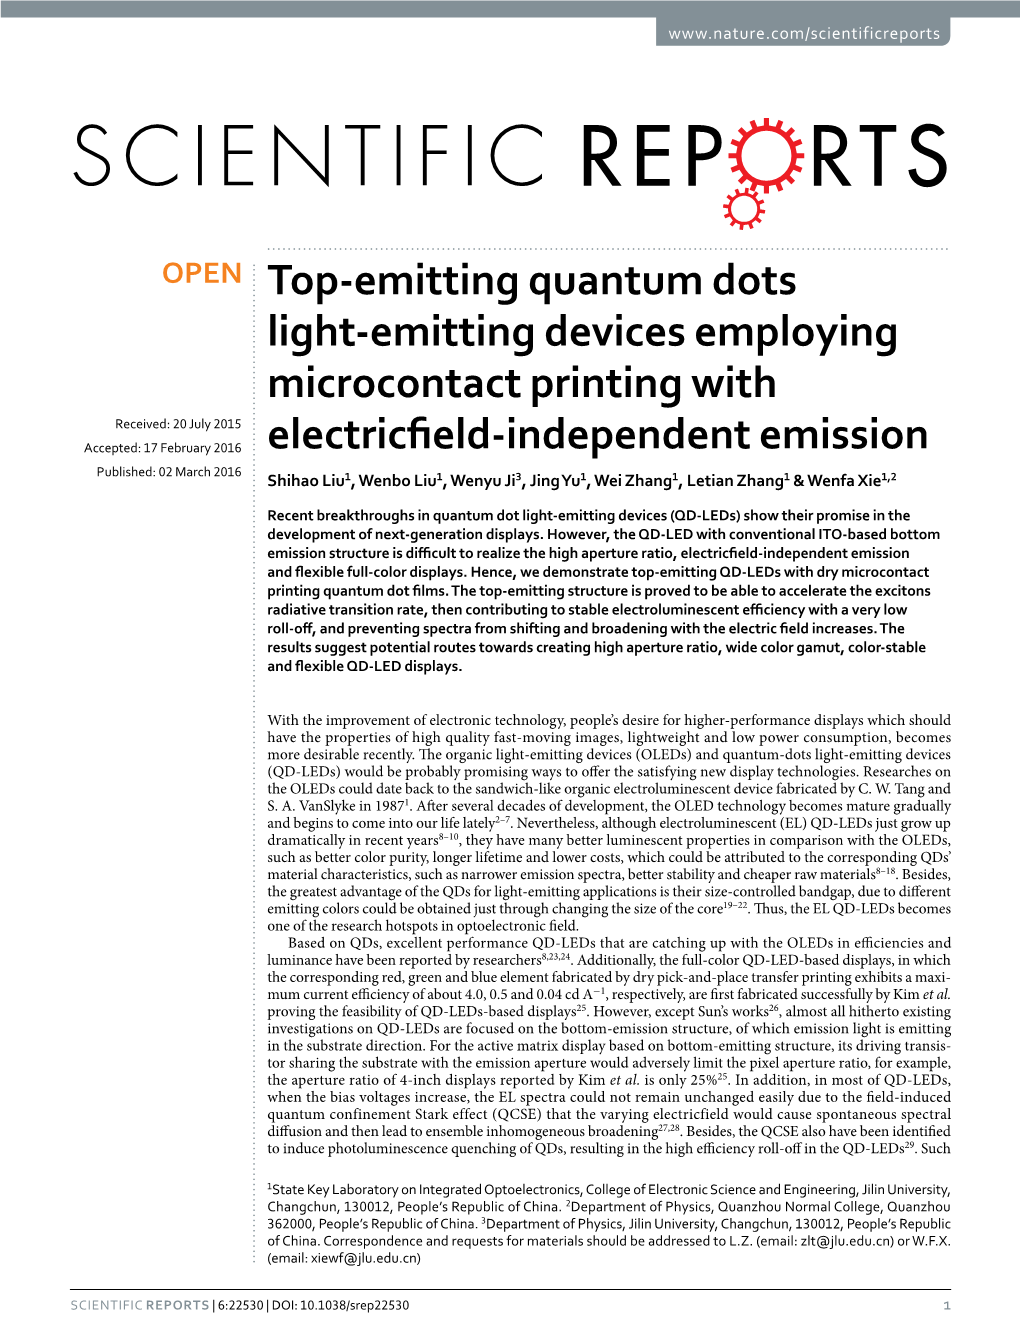 Top-Emitting Quantum Dots Light-Emitting Devices Employing